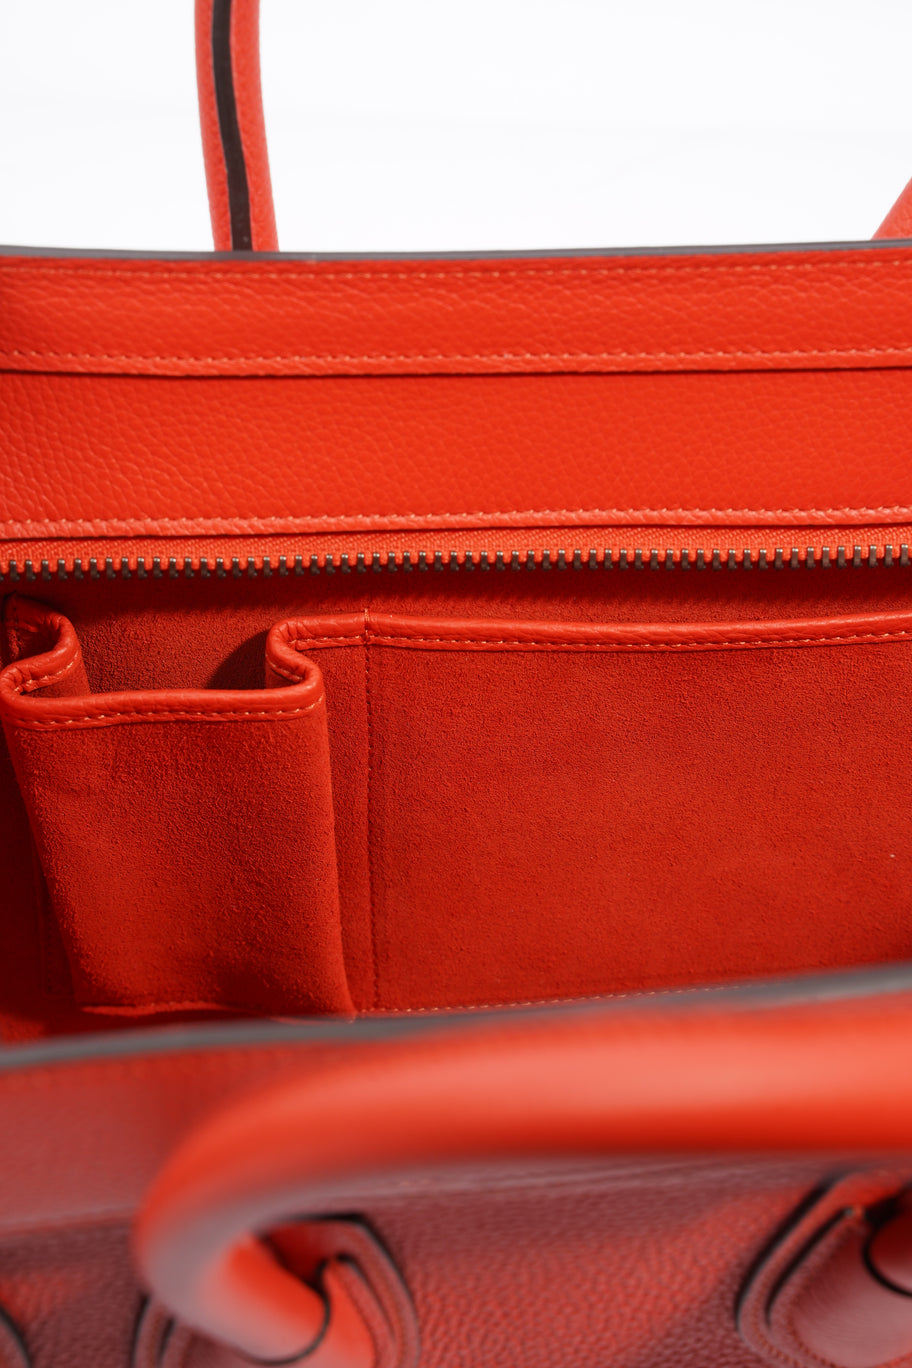 Micro Luggage Orange Calfskin Leather Image 14